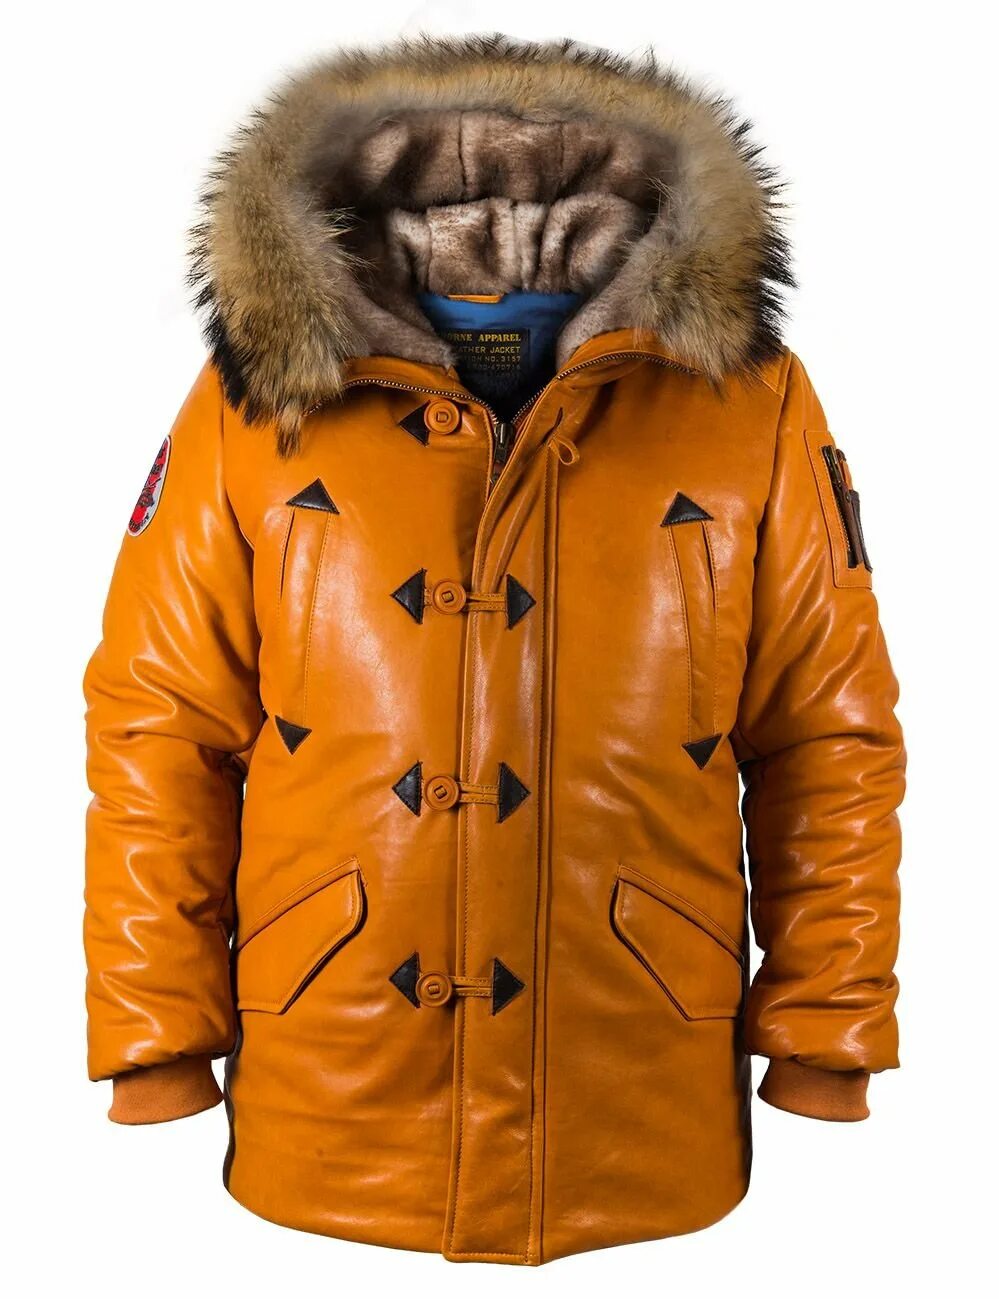 Куртка Аляска North Pole. Куртка Аляска ВМФ. Куртка Аляска Альпина. Кожаная Аляска мужская.